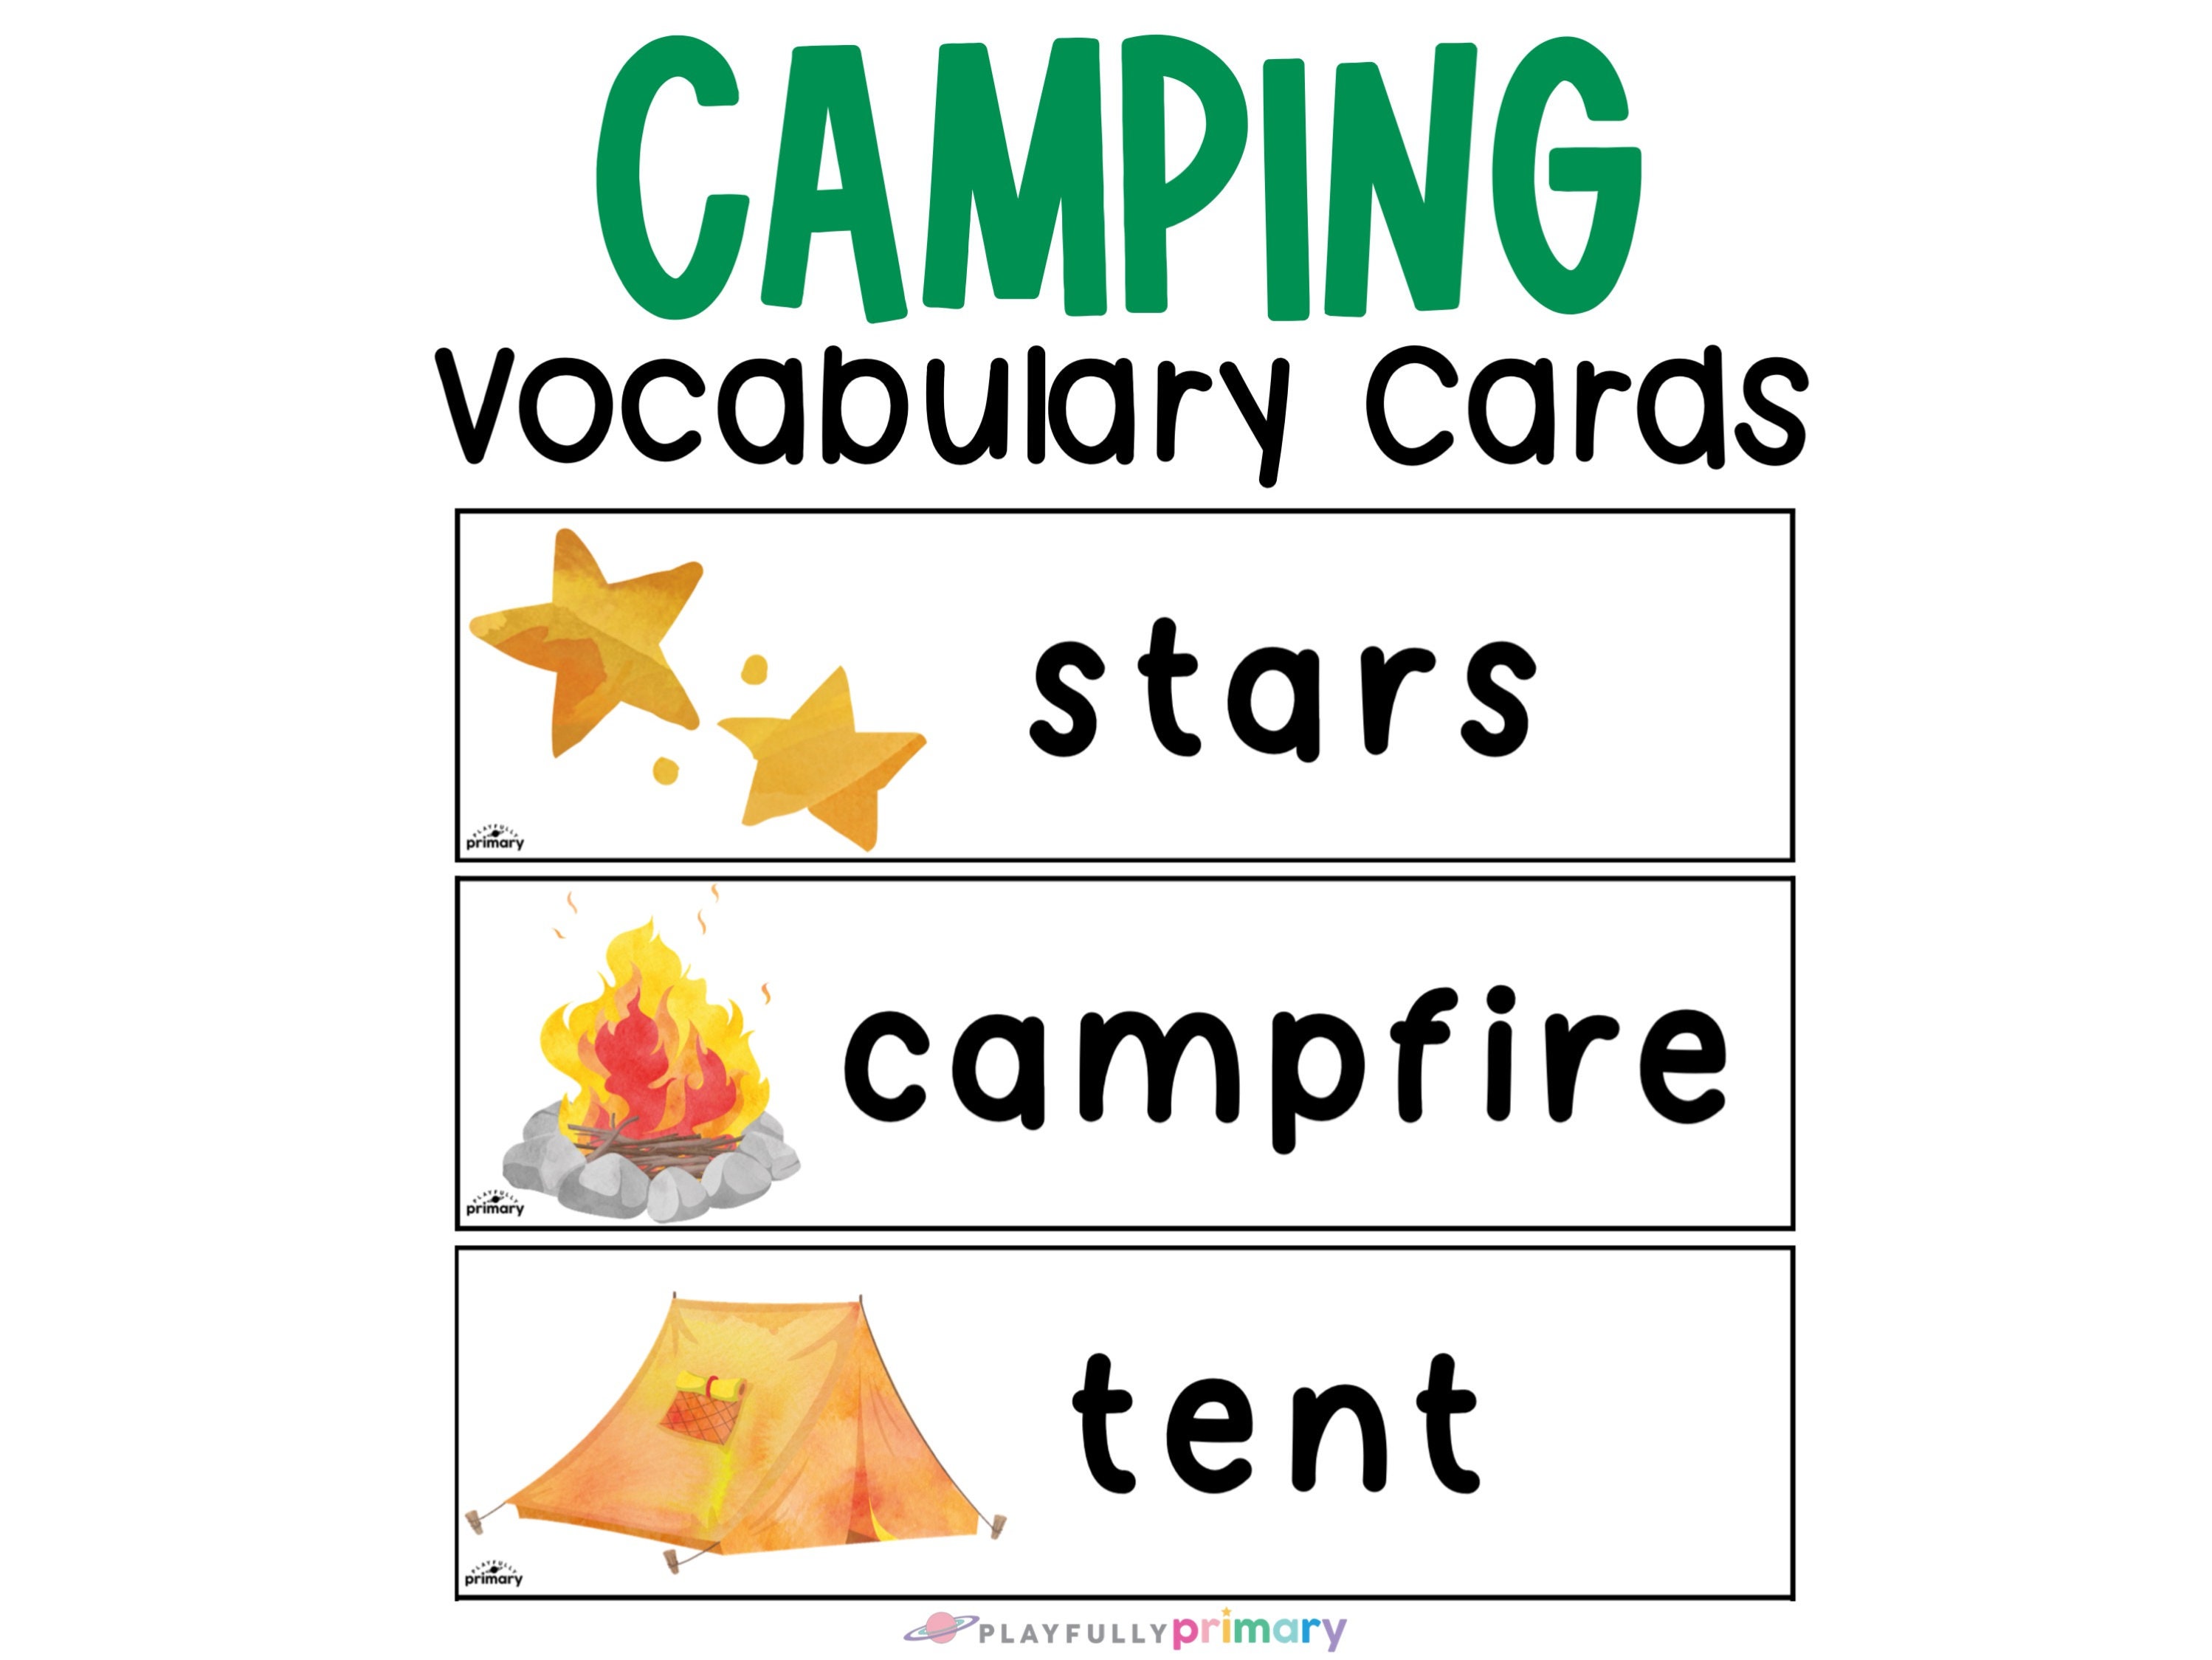 Camp Fun! Playdoh Mats  Word work centers, Camping fun, Camping theme  preschool